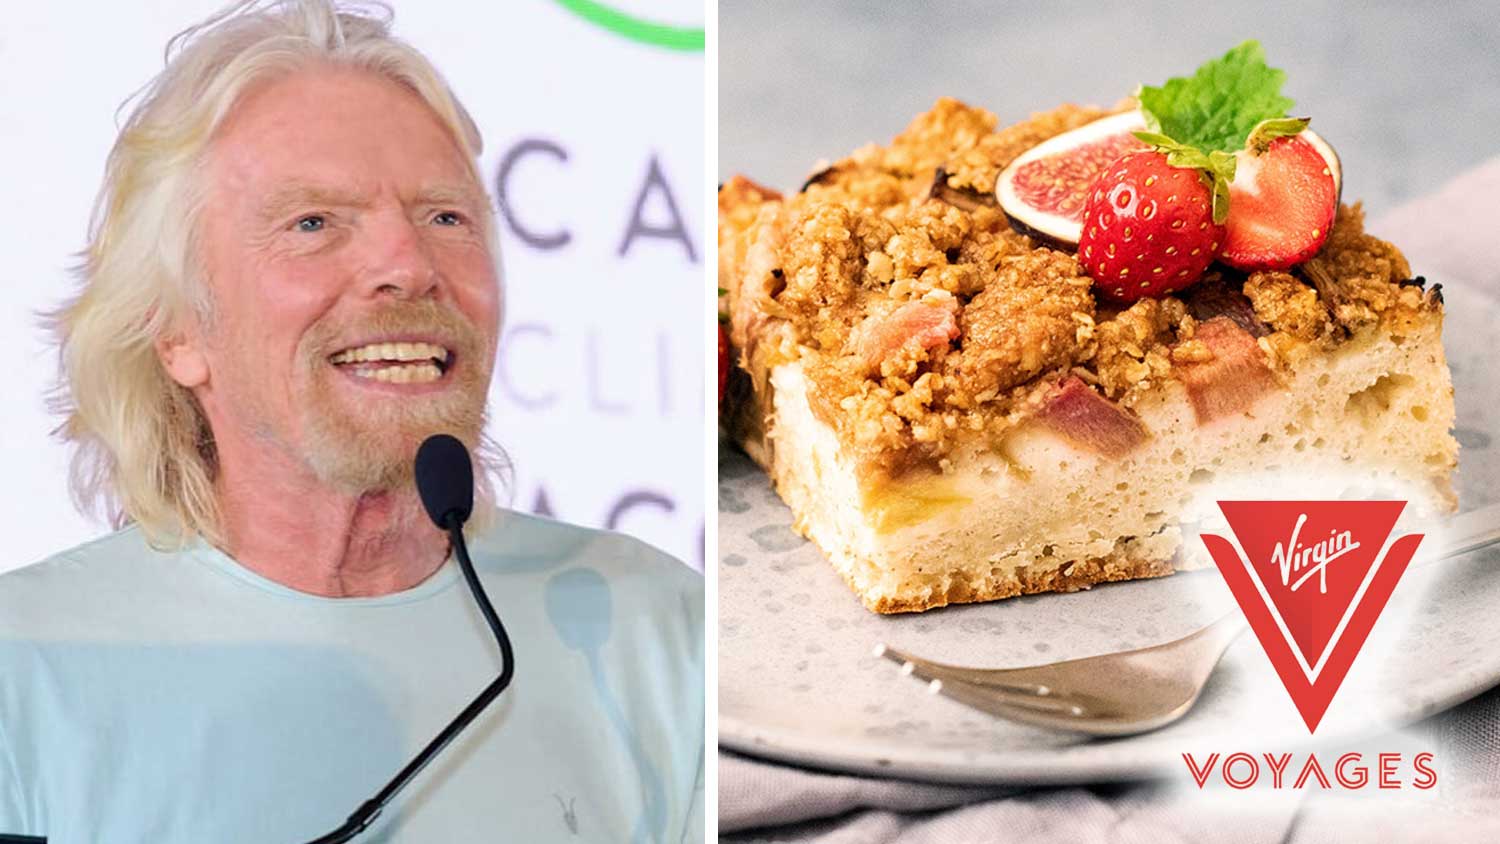 Richard Branson’s Cruise Ship Increases Vegan Options for Sustainability